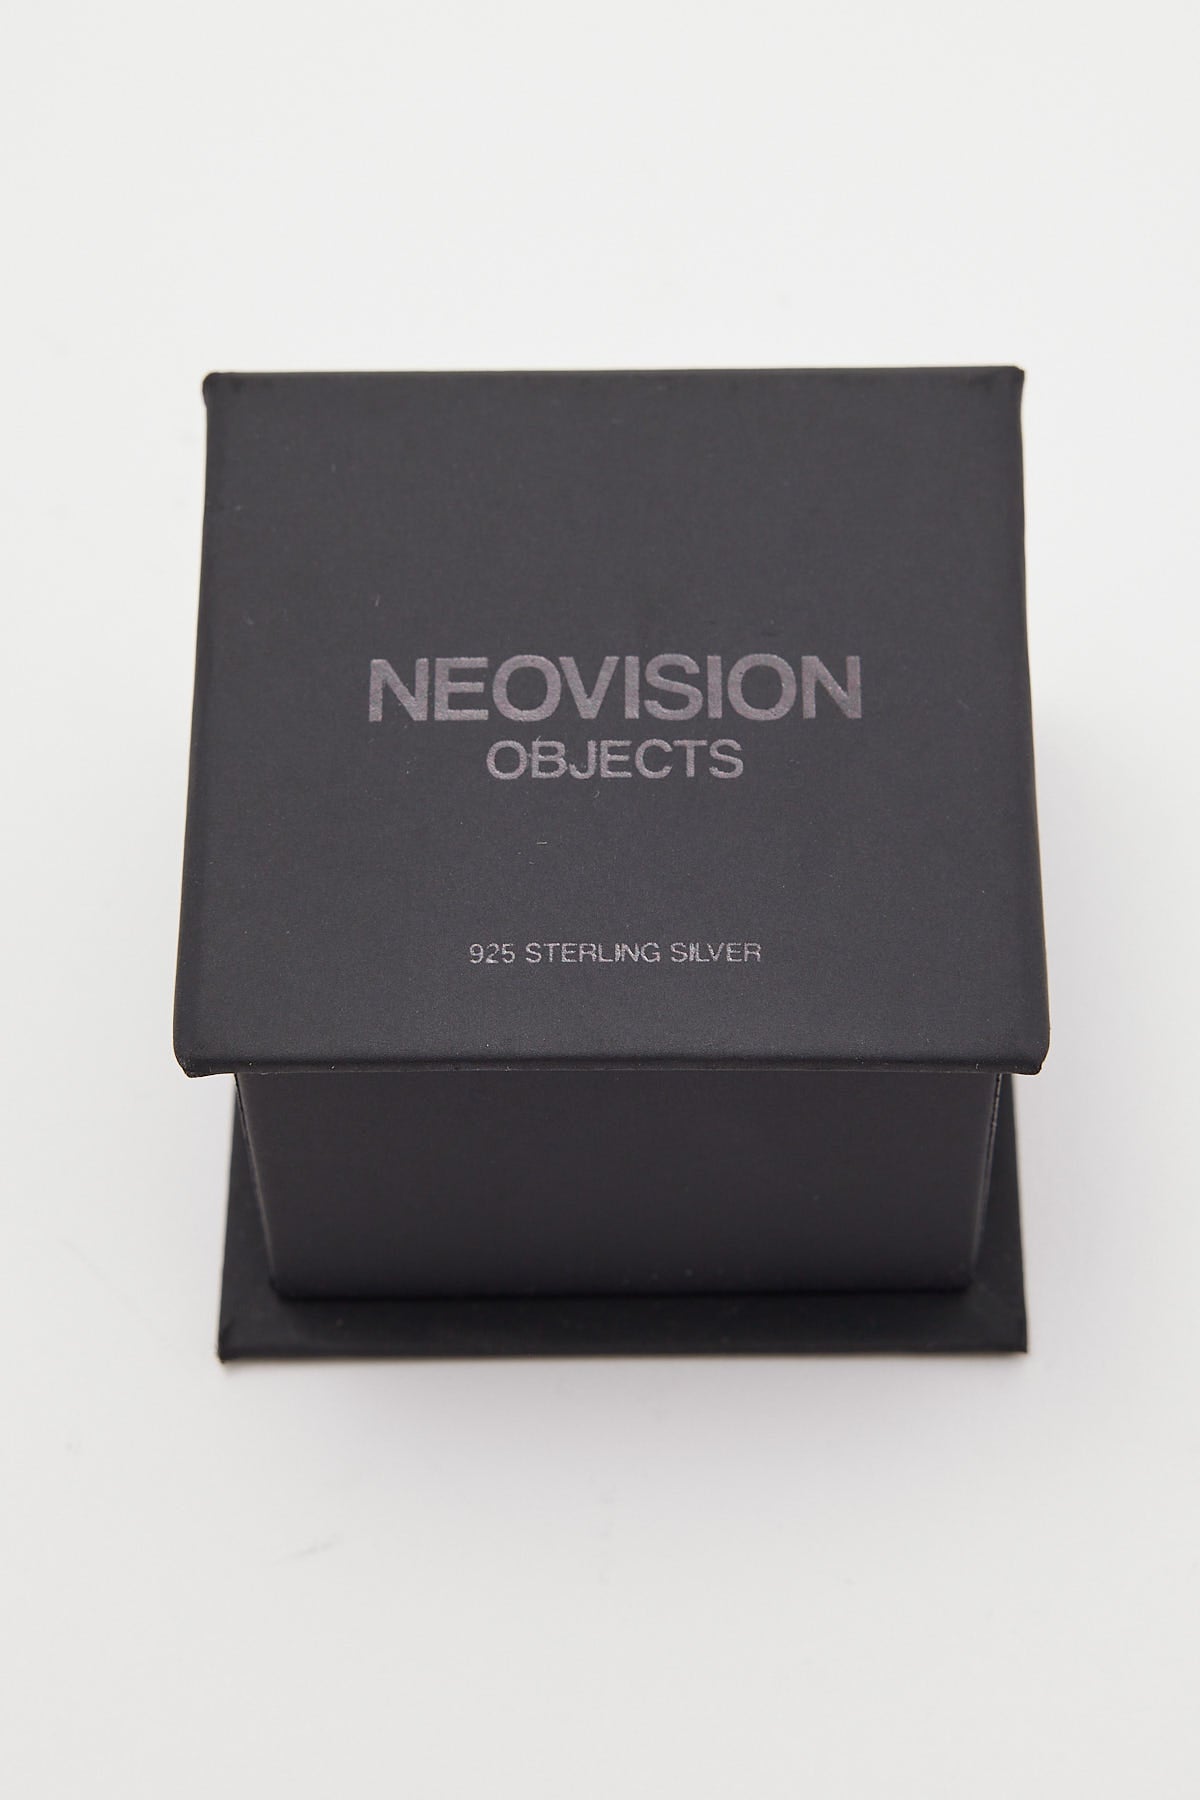 Neovision Horizon Sterling Silver Signet Ring Silver